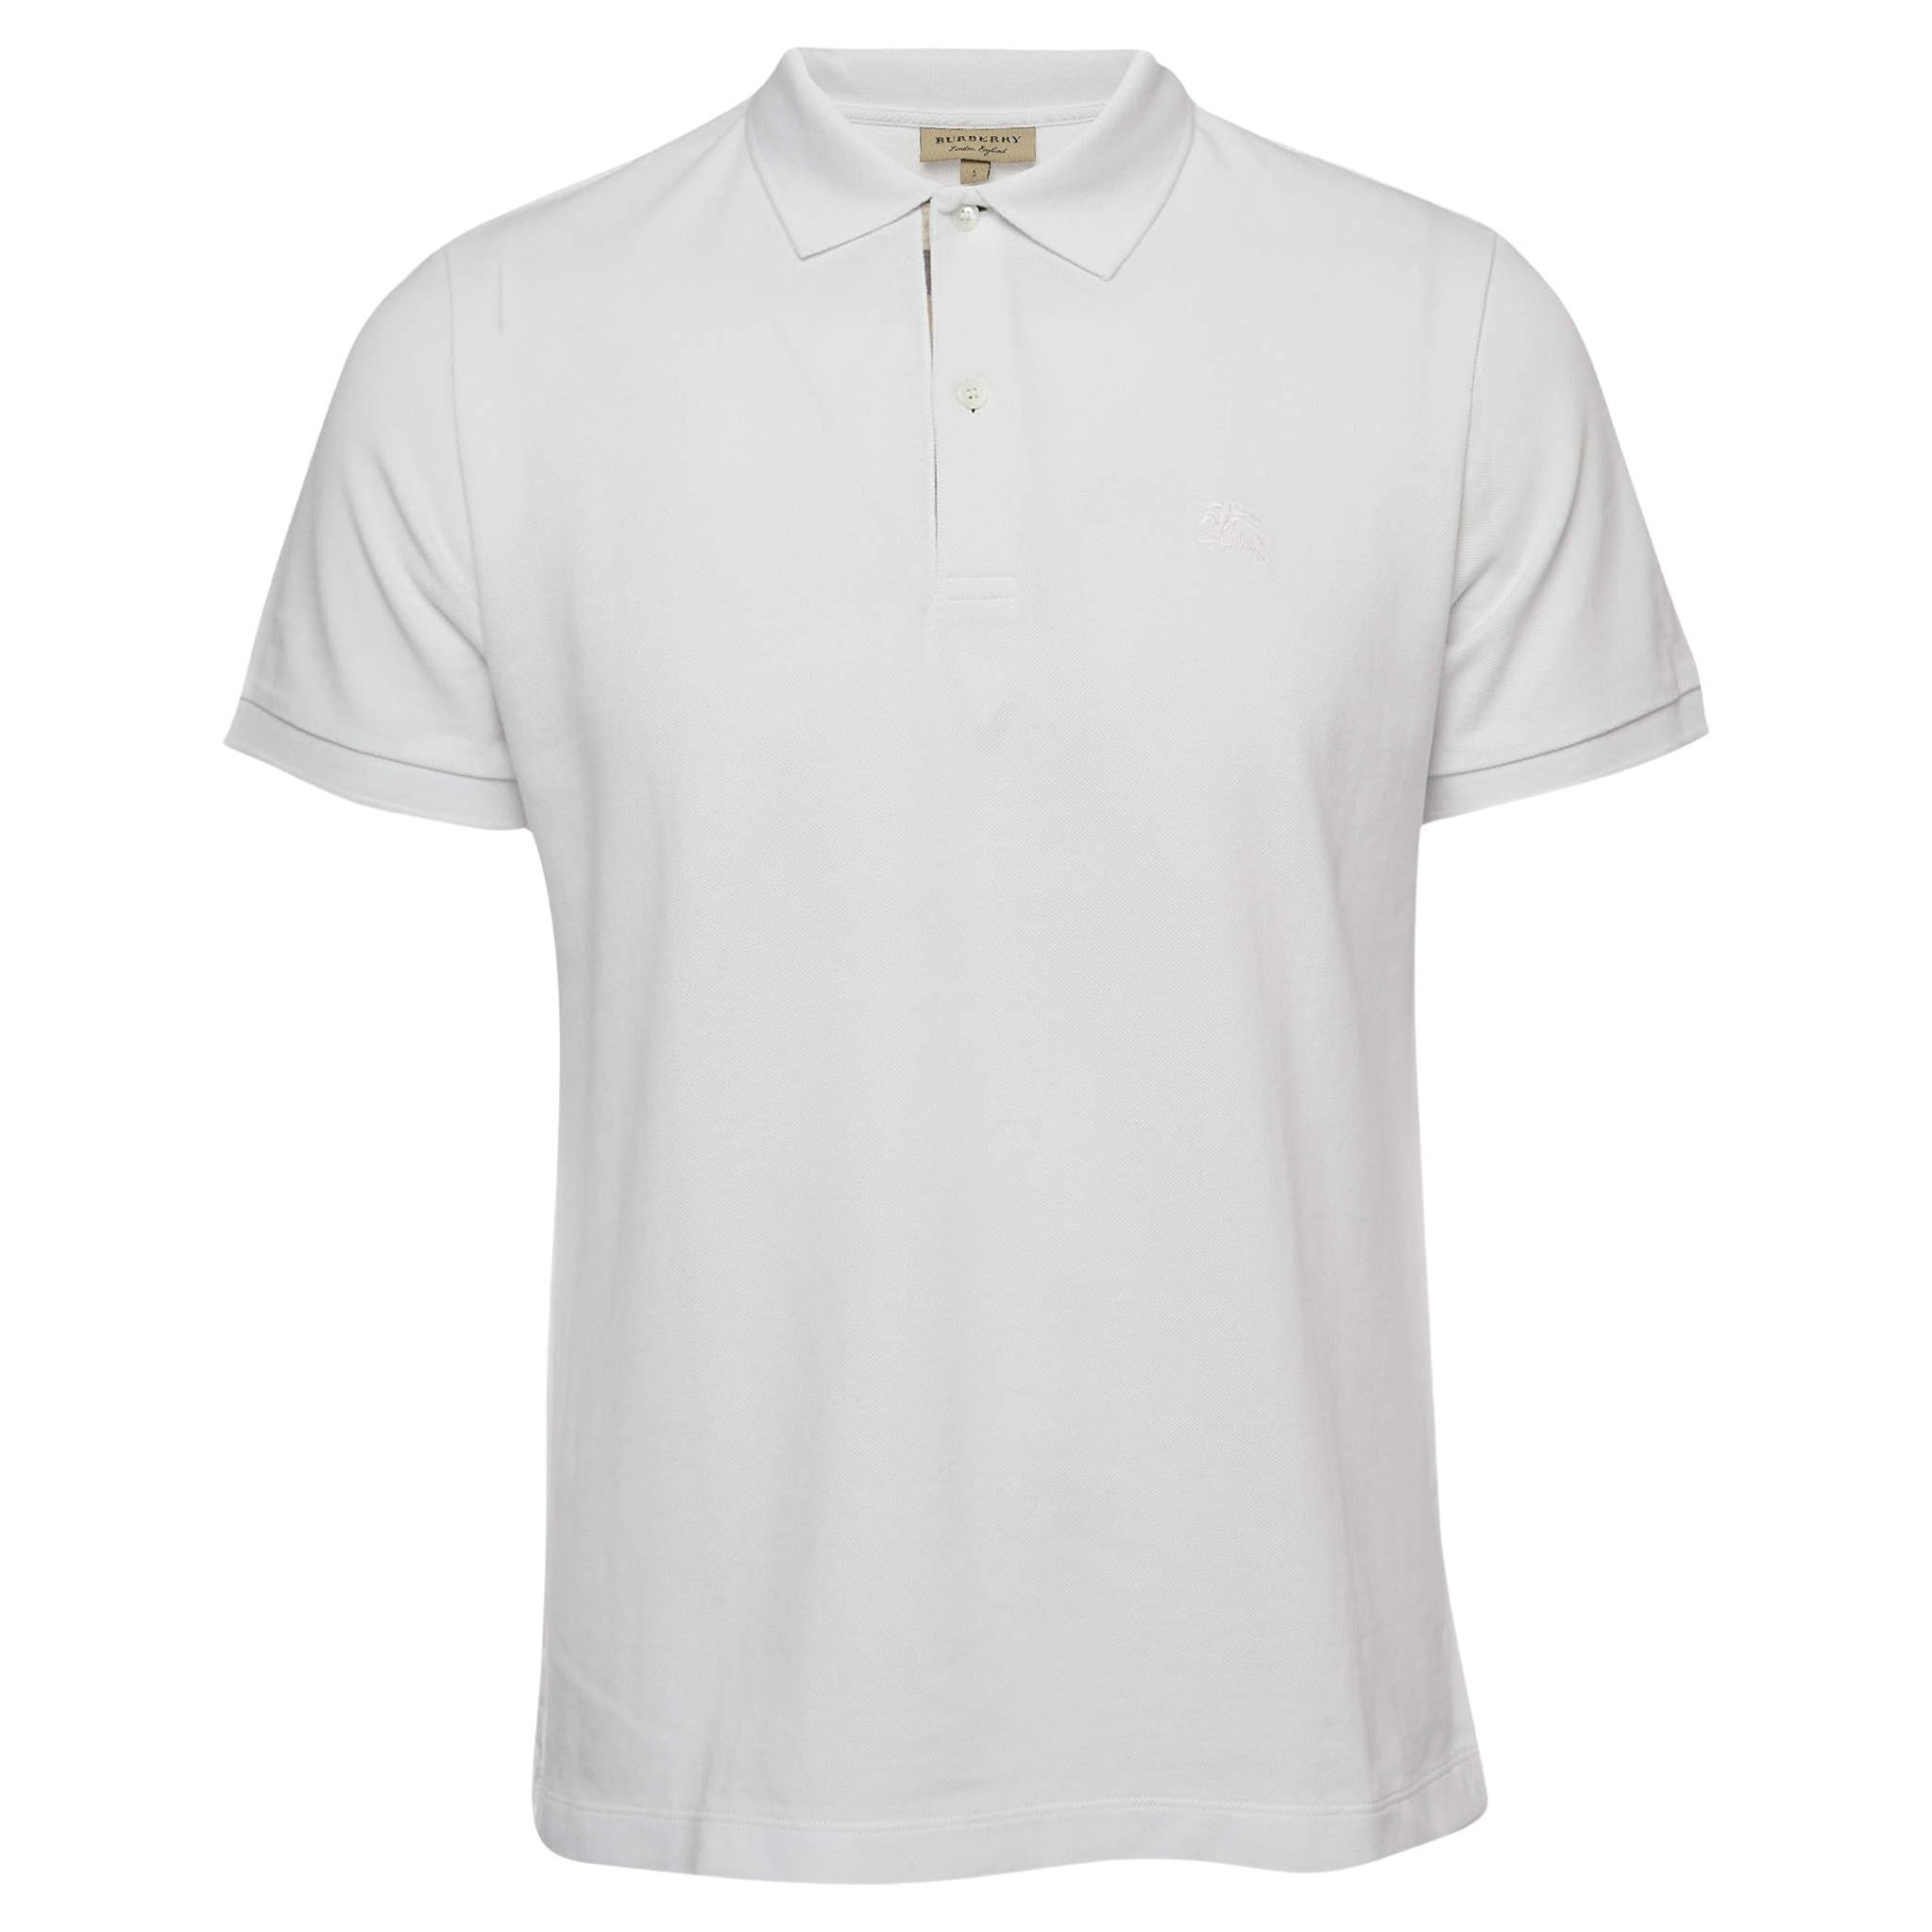 Burberry White Cotton Pique Polo T-Shirt L